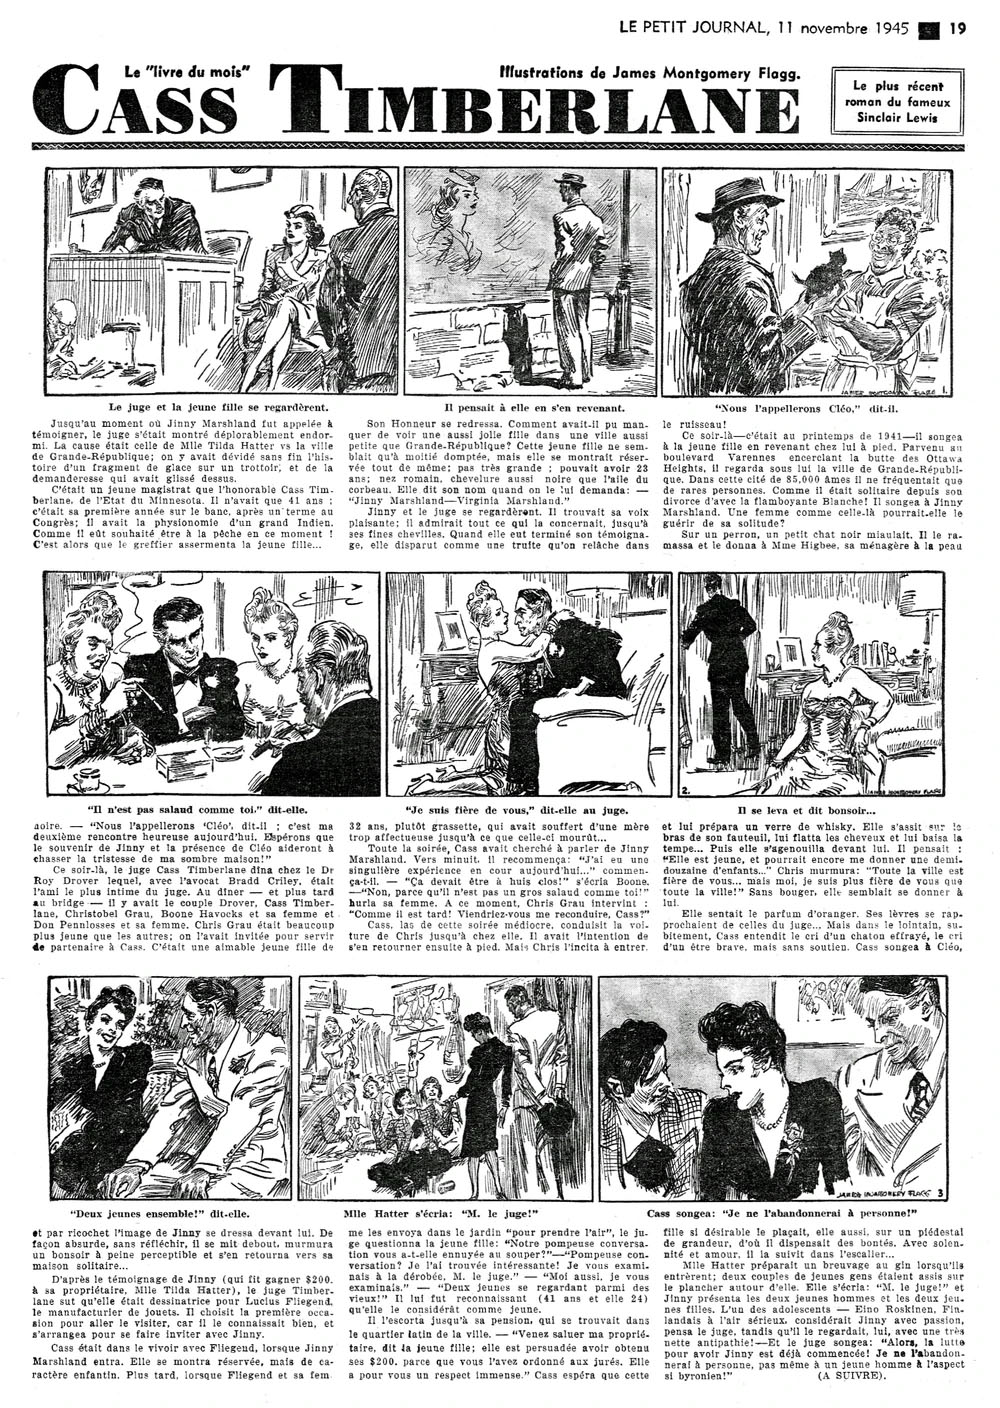 James M. Flagg. Cass Timberlane, novel by Sinclair Lewis (from Le Petit Journal, 11 november 1945)..jpg